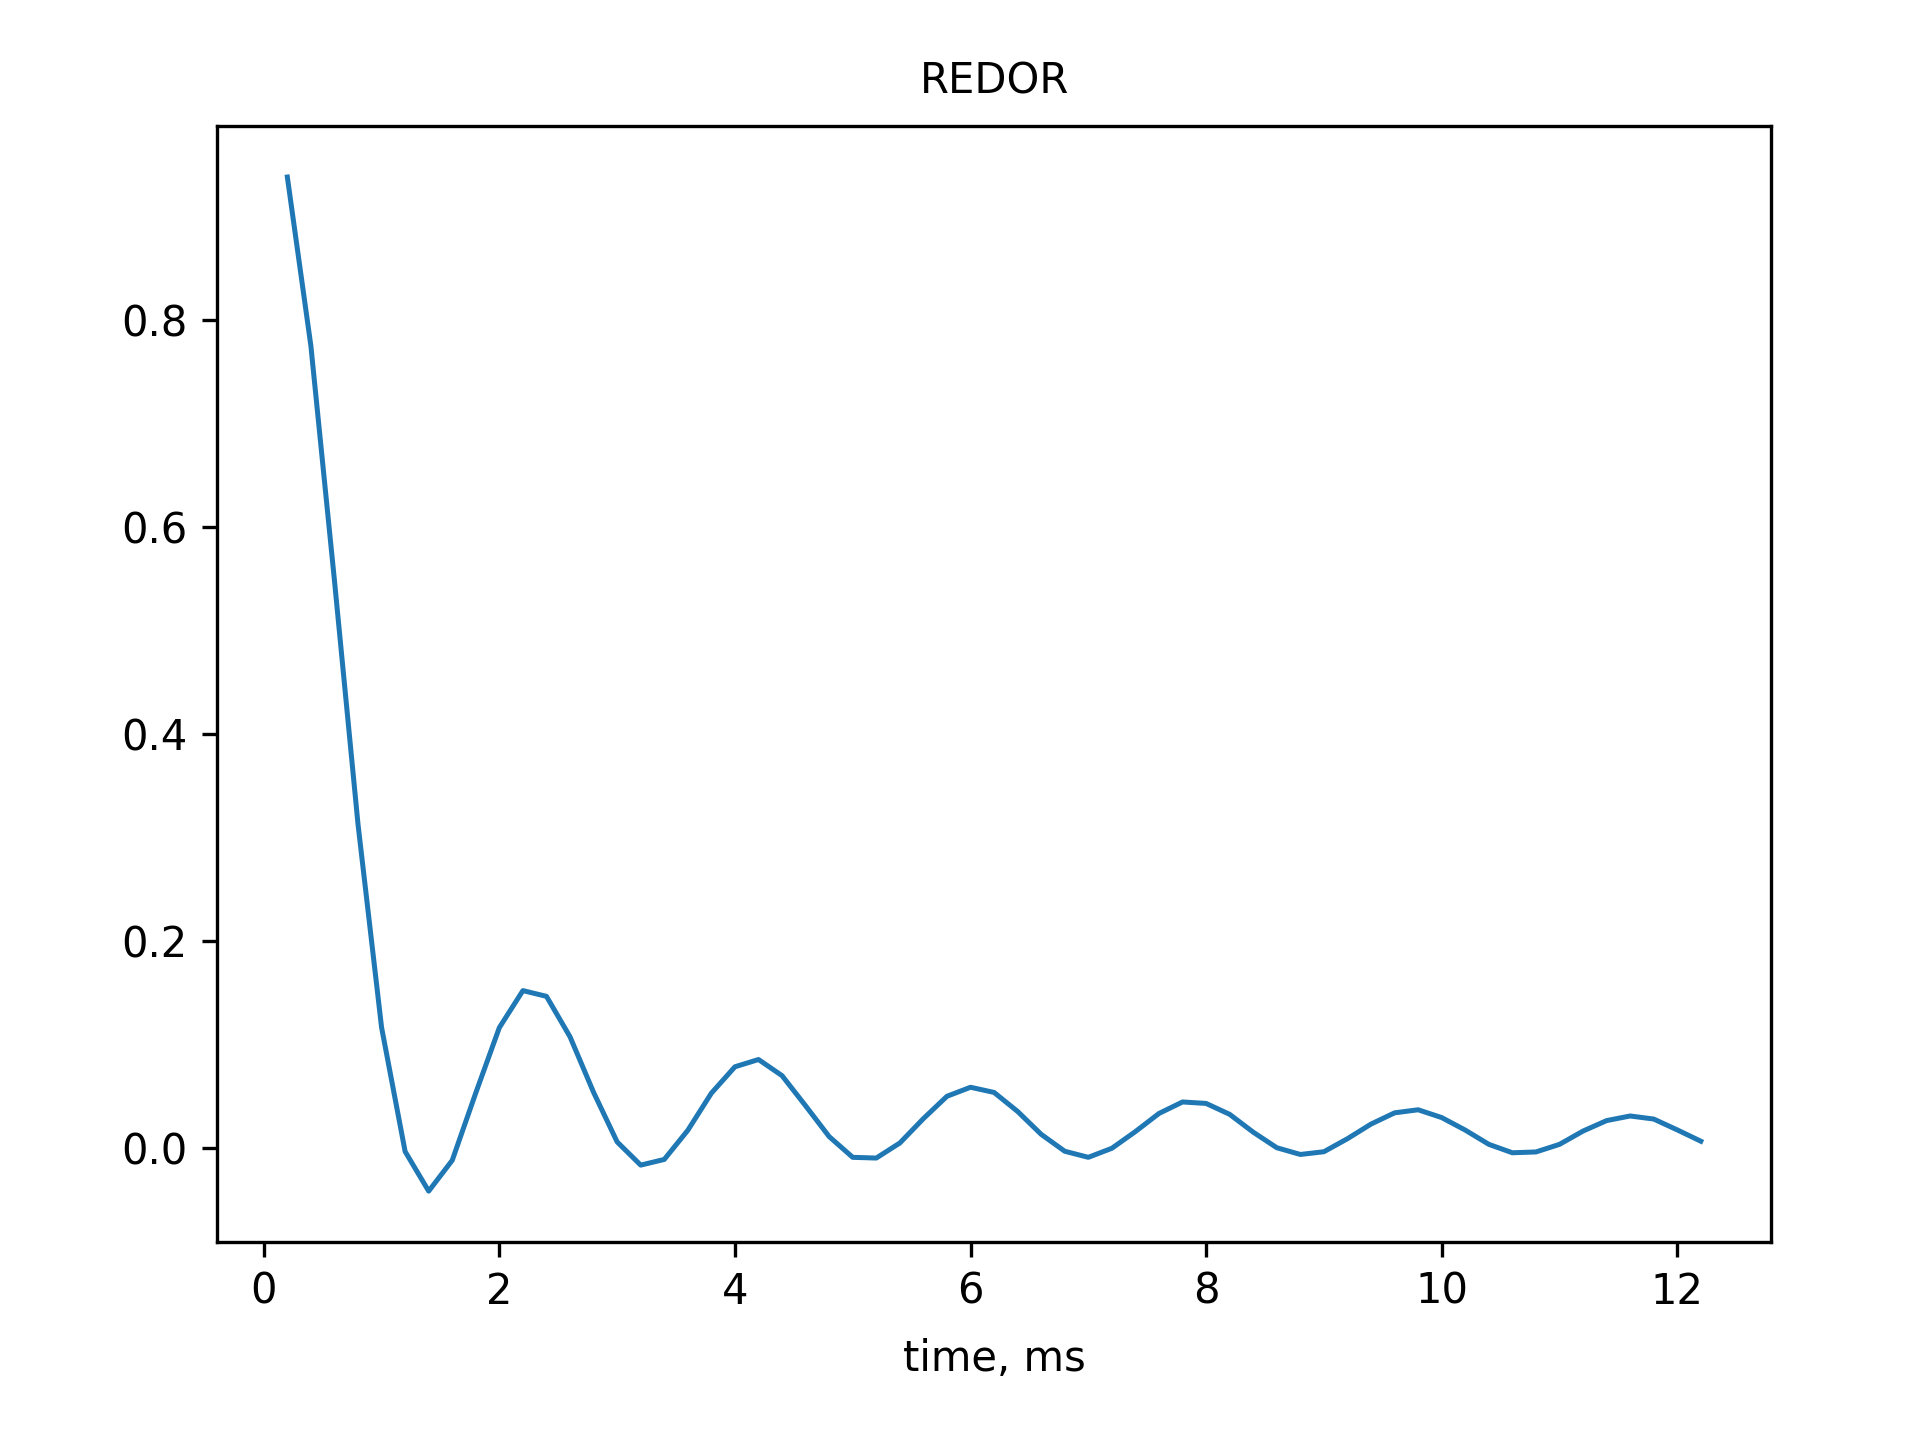 REDOR Simulation